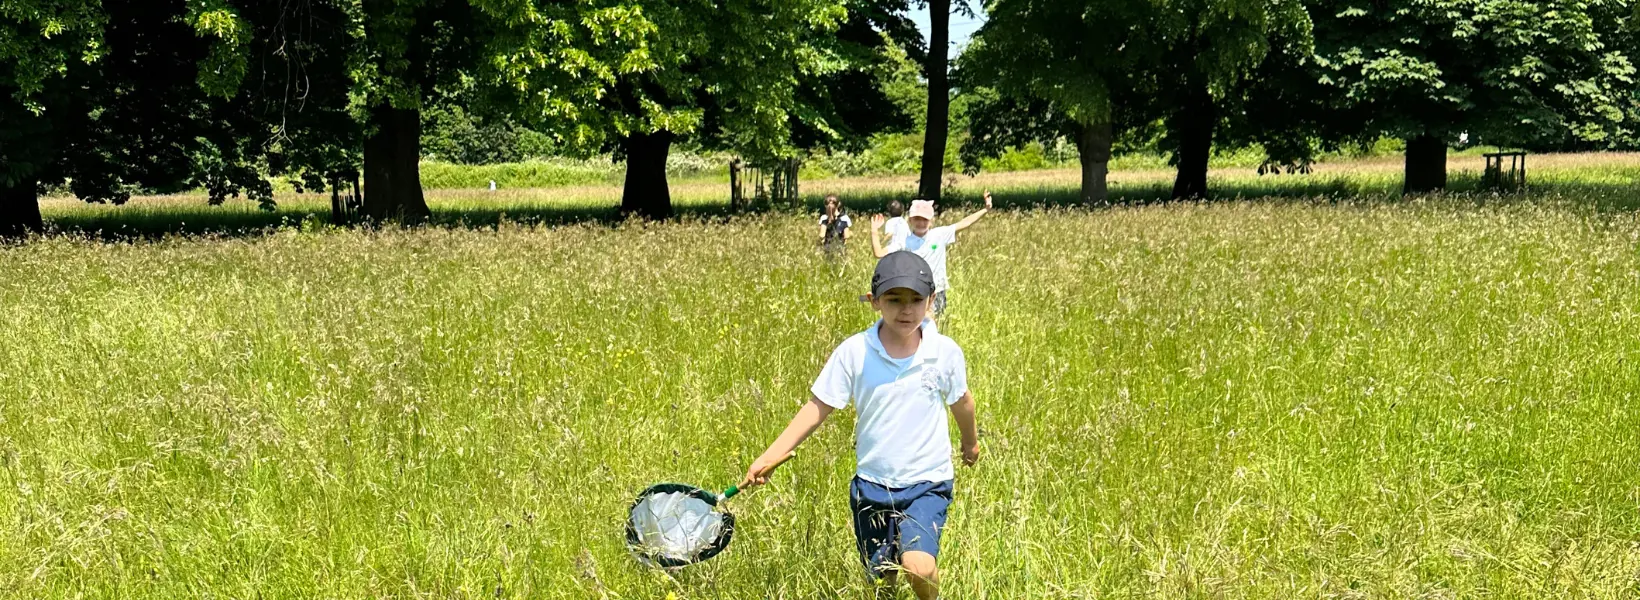 prep pupils running through the grounds of Richmond Park near Ibstock Place School.